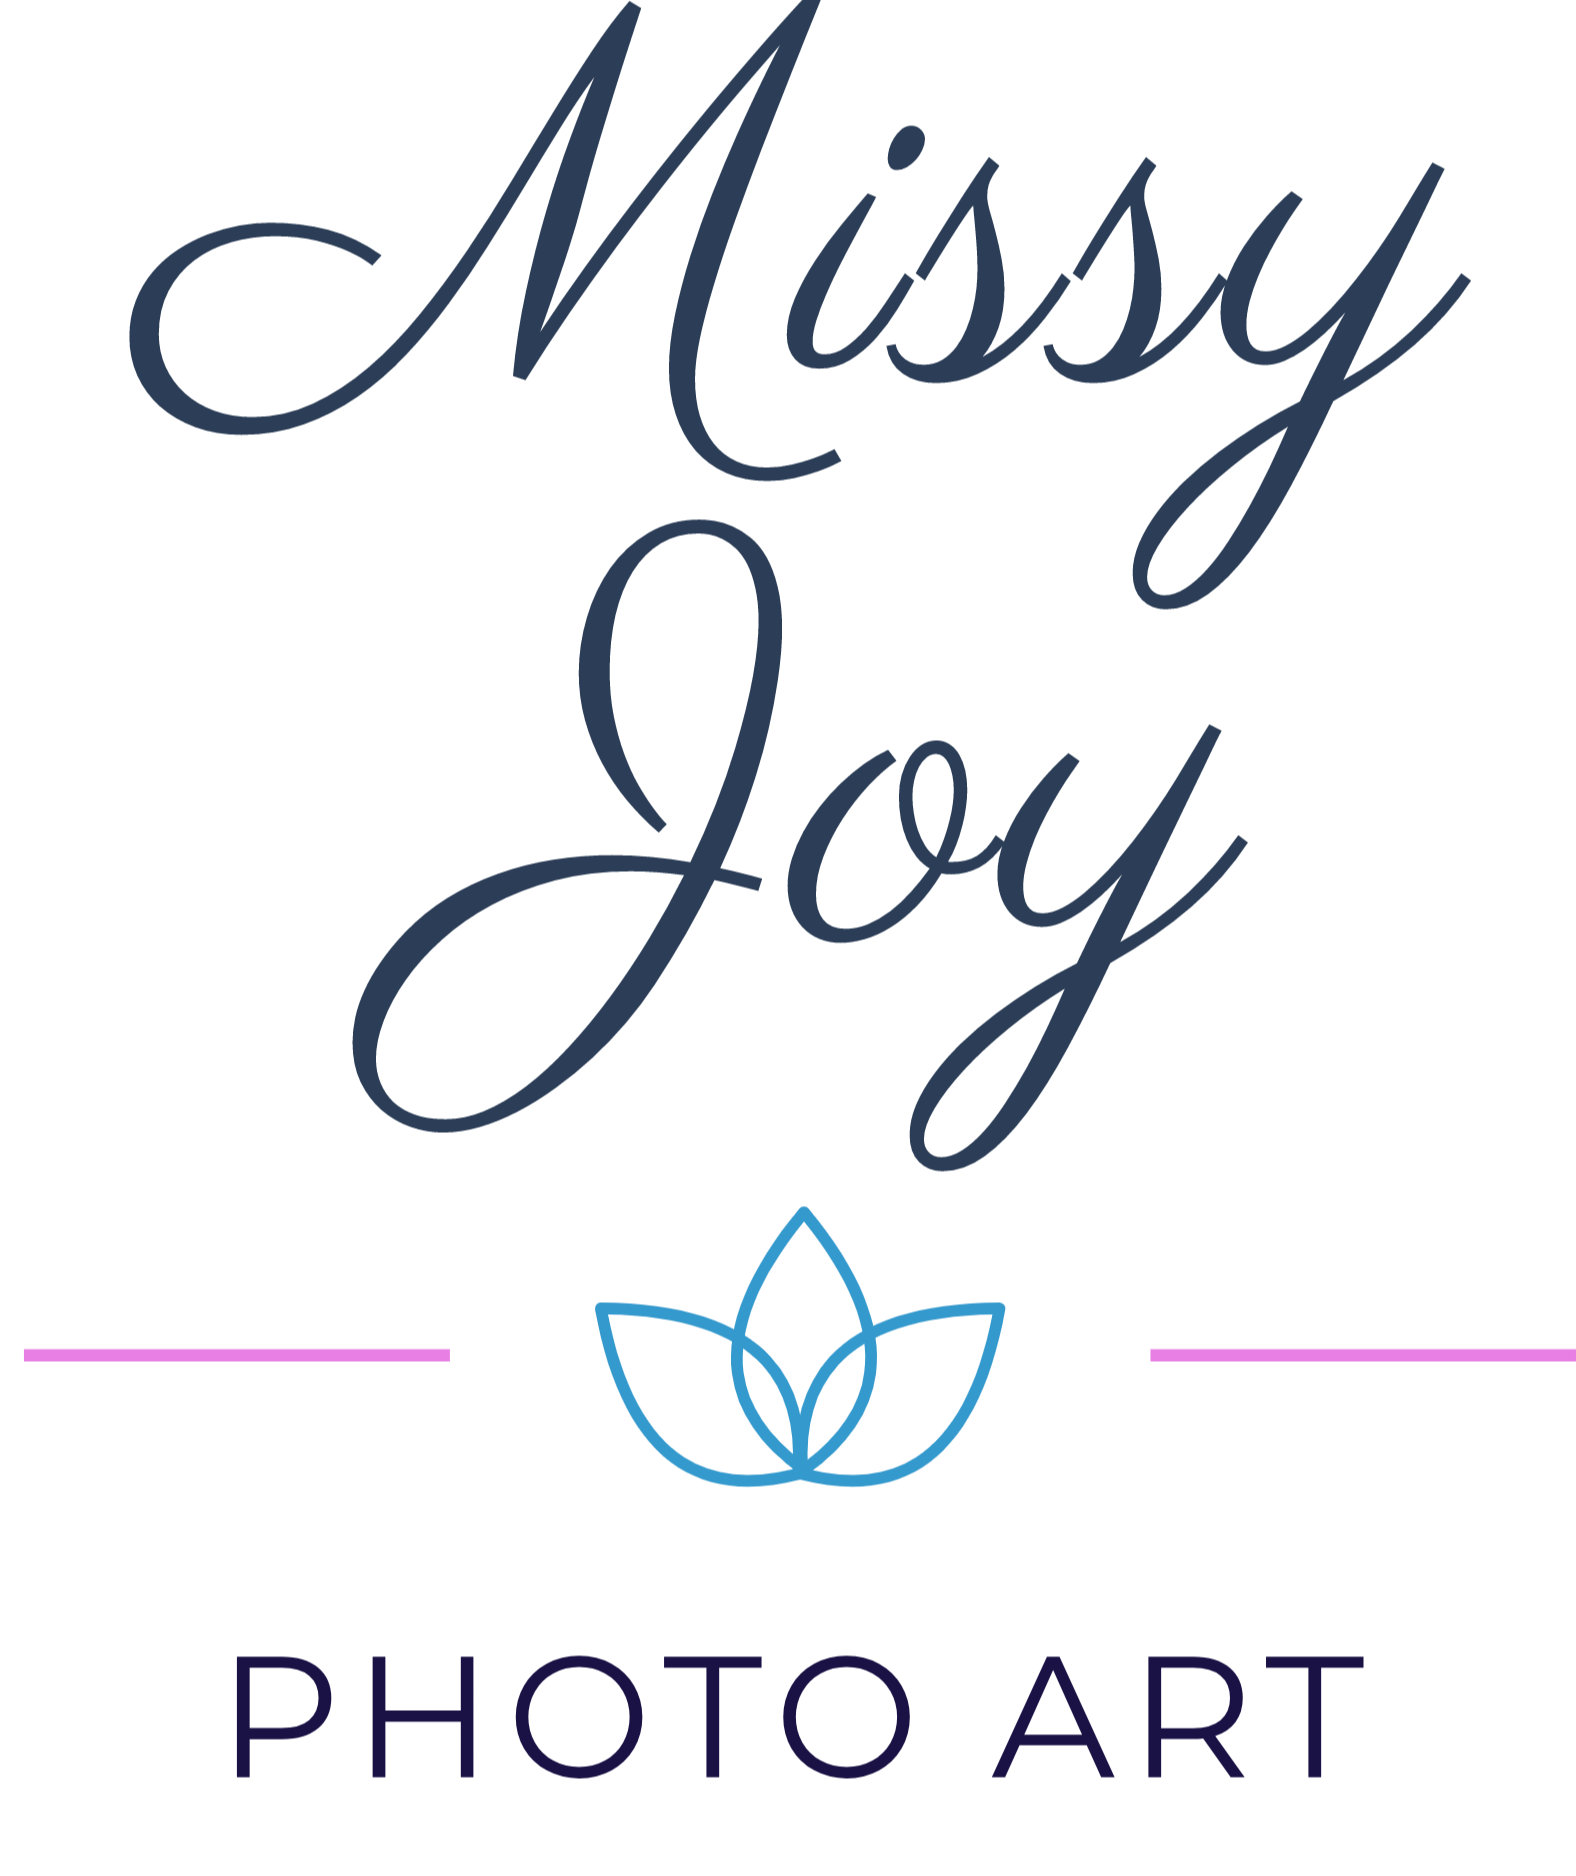 Missy Joy - Website